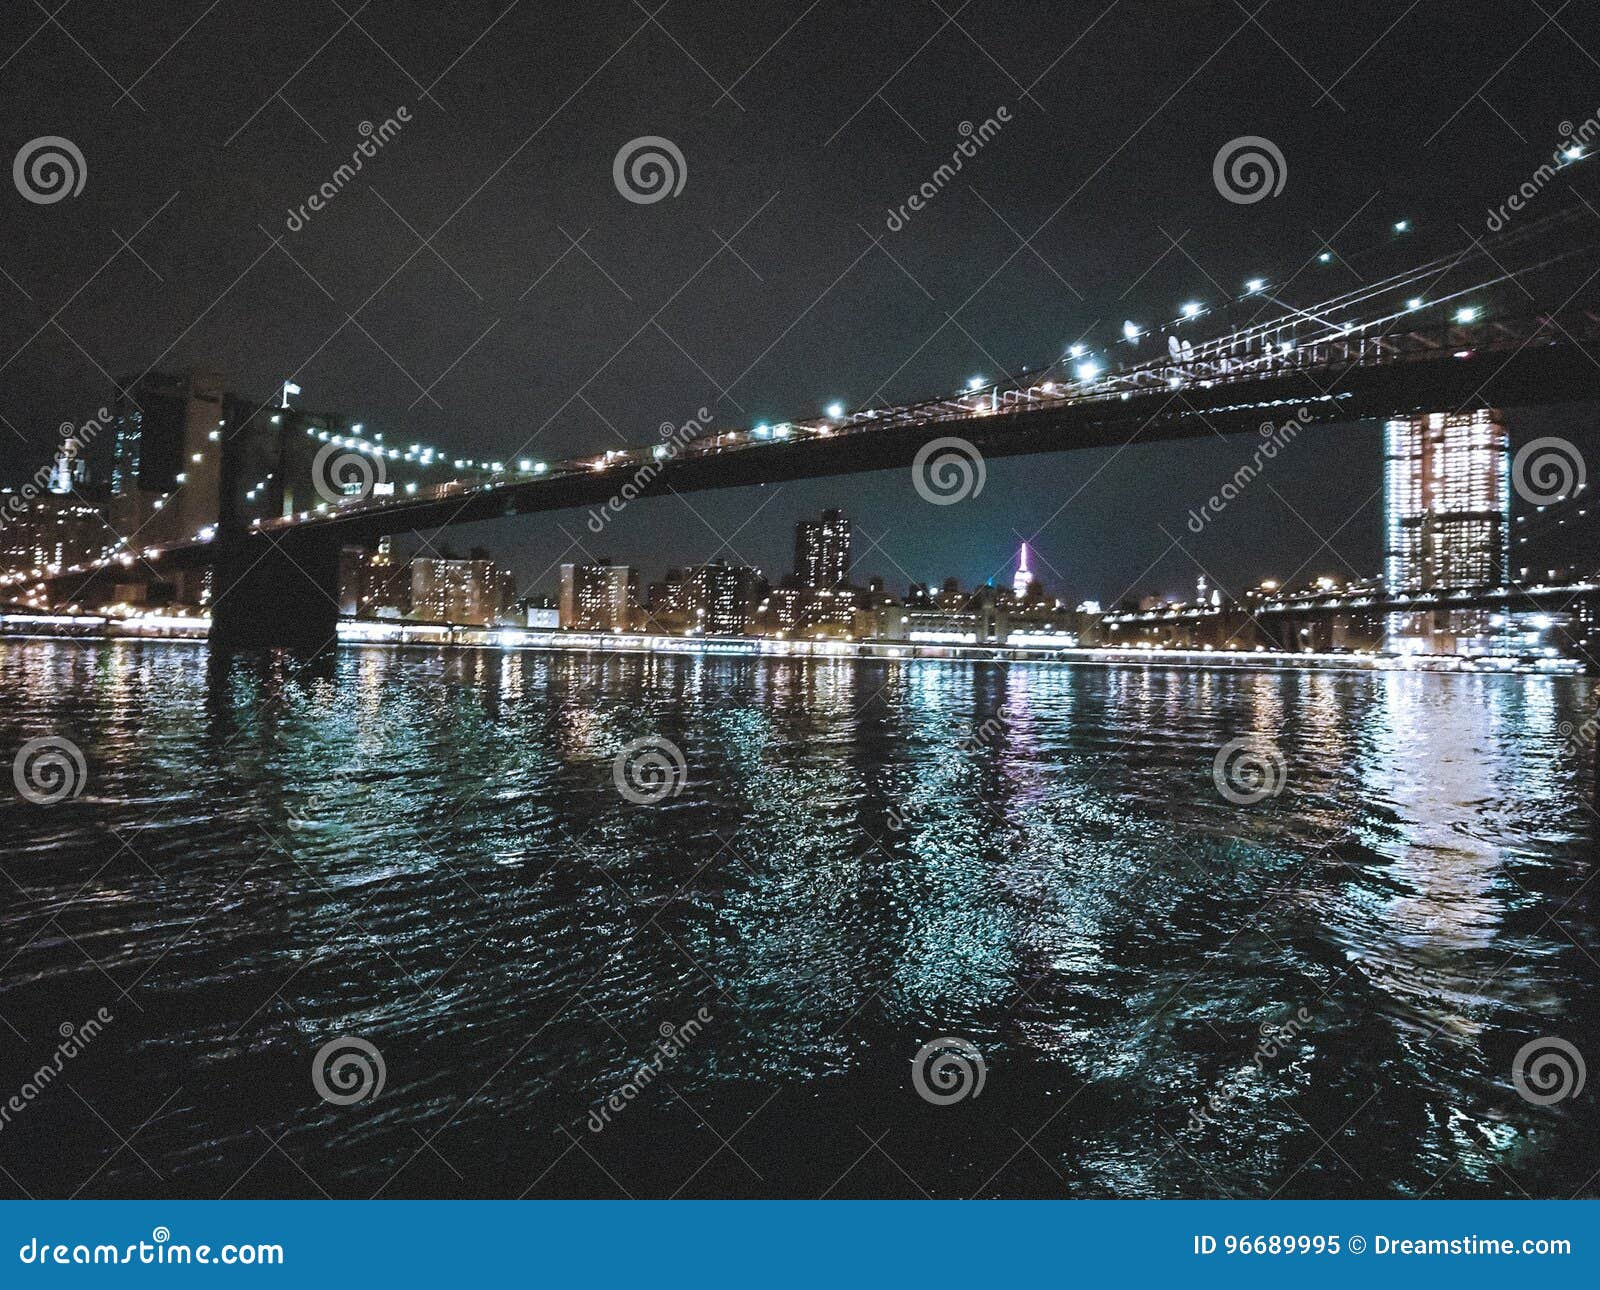 Brooklyn bridge stock image. Image of view, bridge, amazing - 96689995